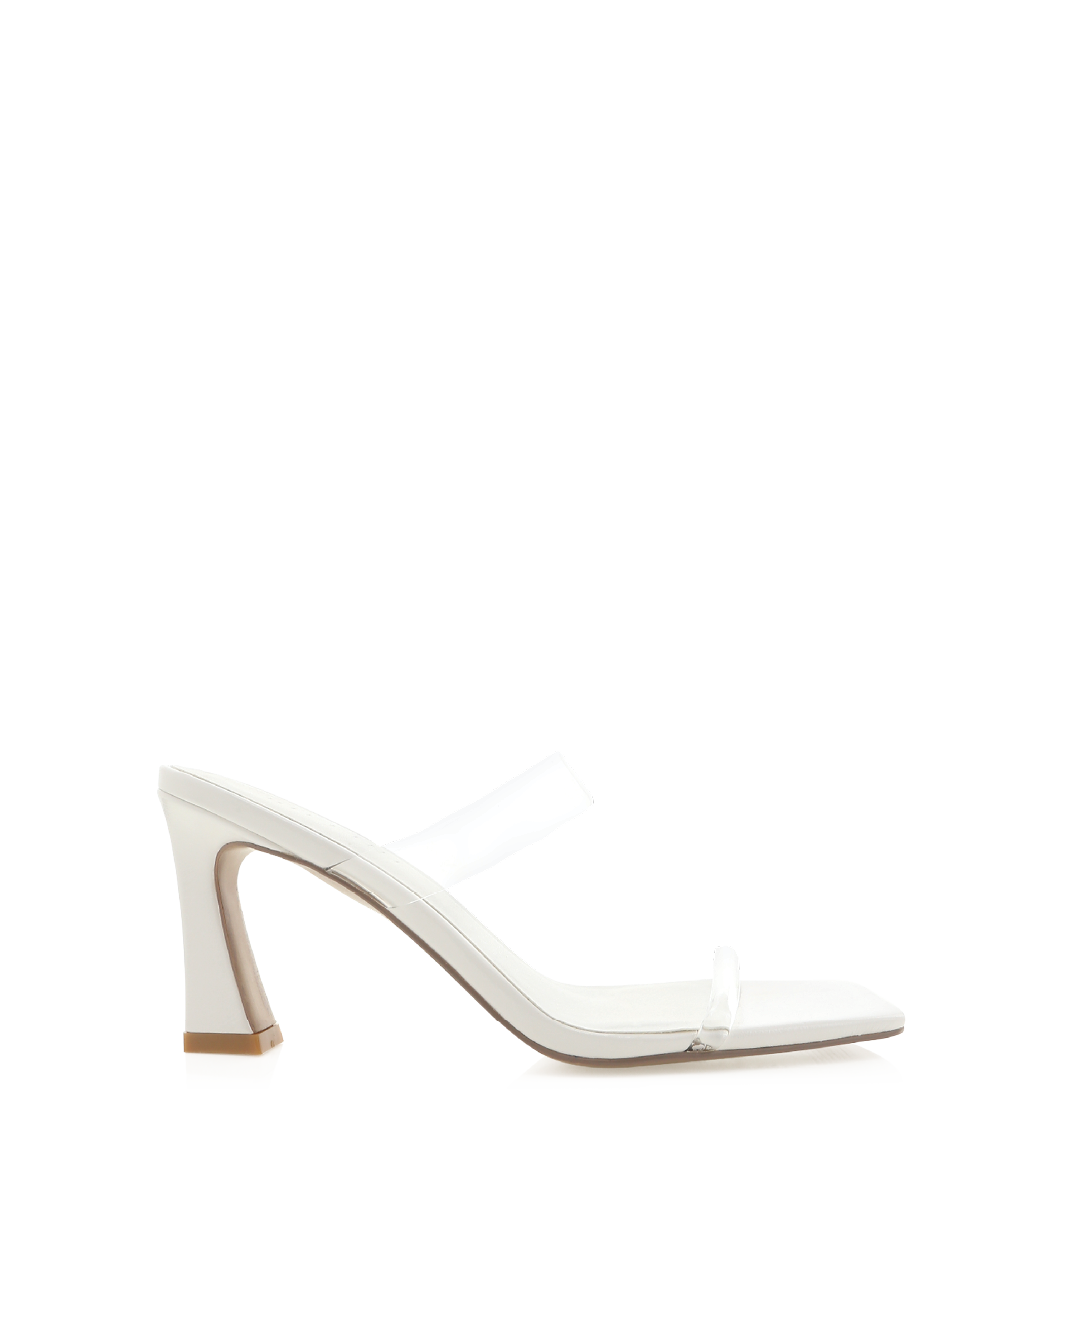 MIKANA - WHITE PATENT-CLEAR-Heels-Billini-Billini